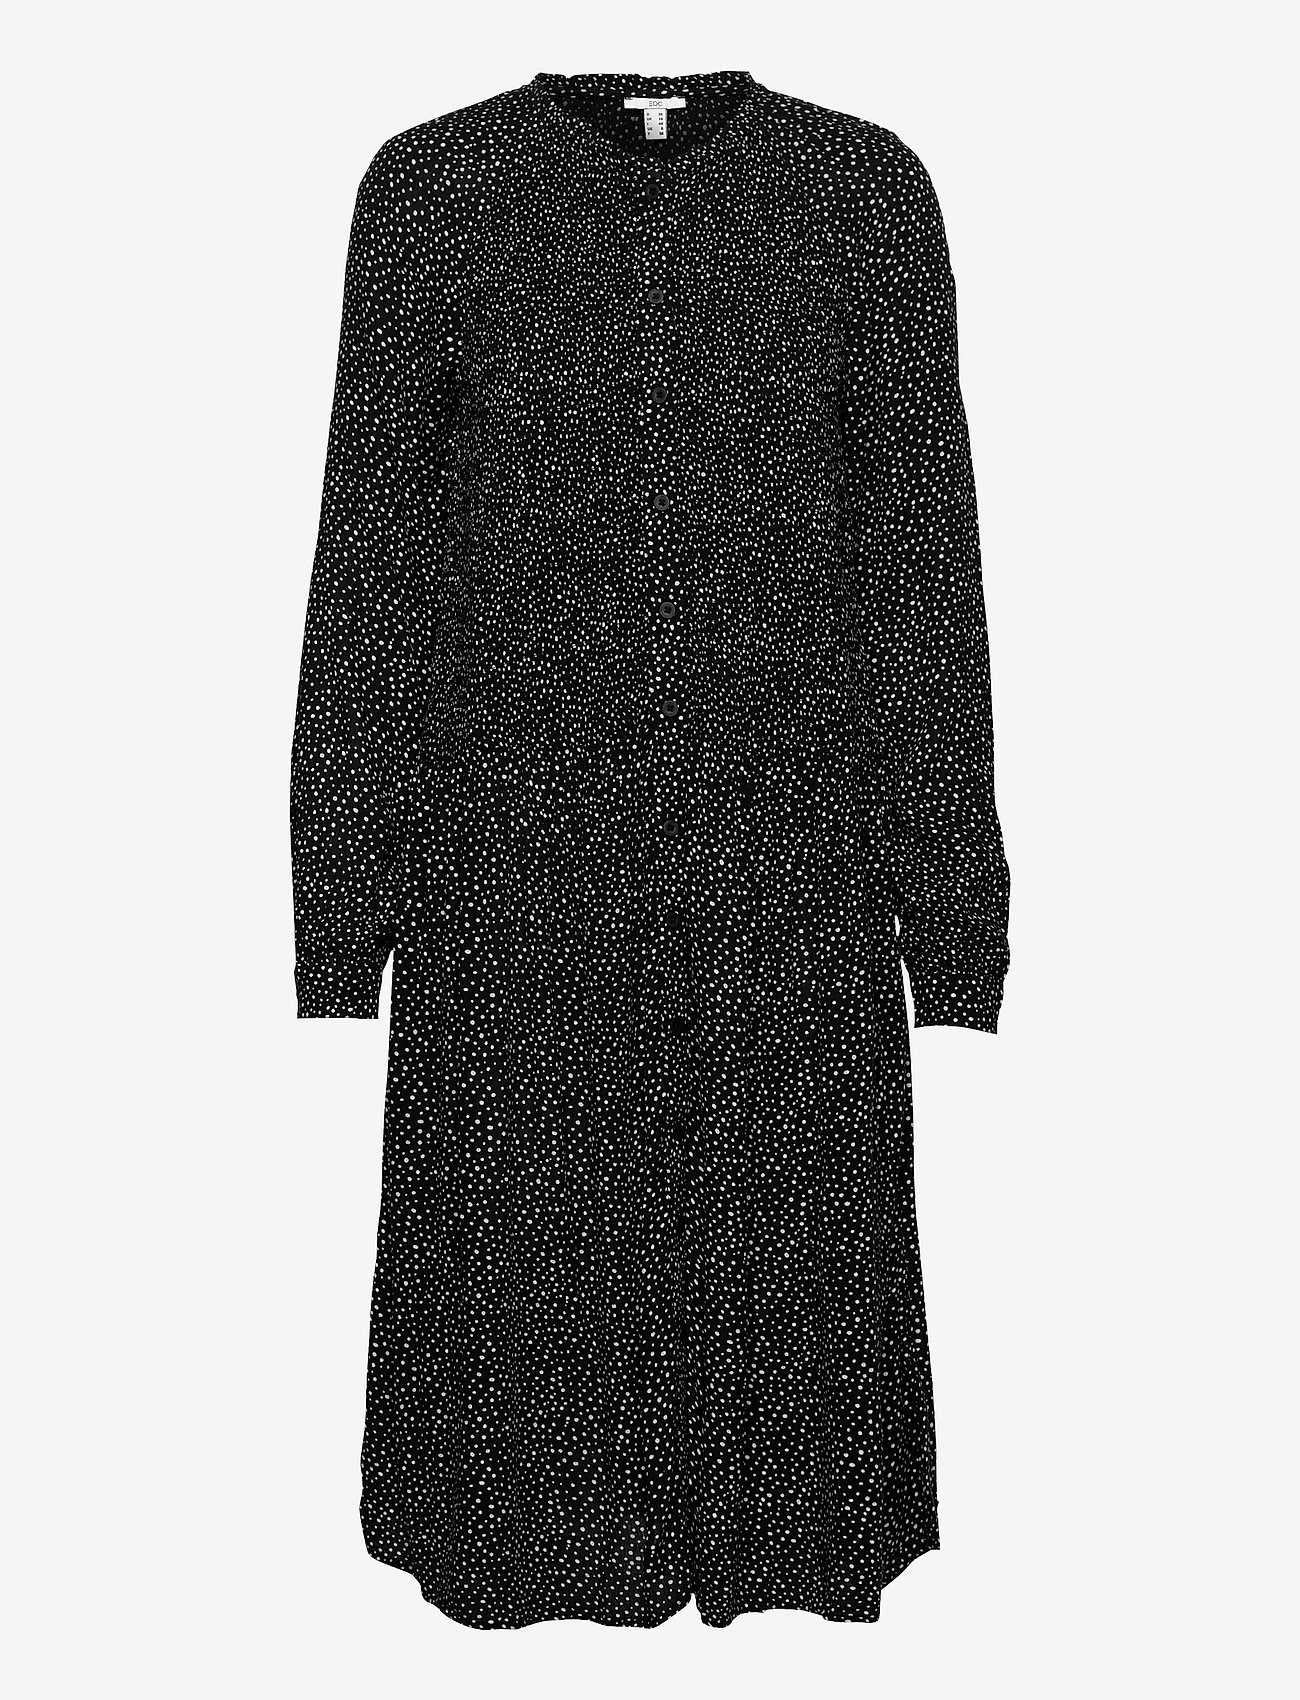 EDC by Esprit - Dresses light woven - midimekot - black 3 - 0